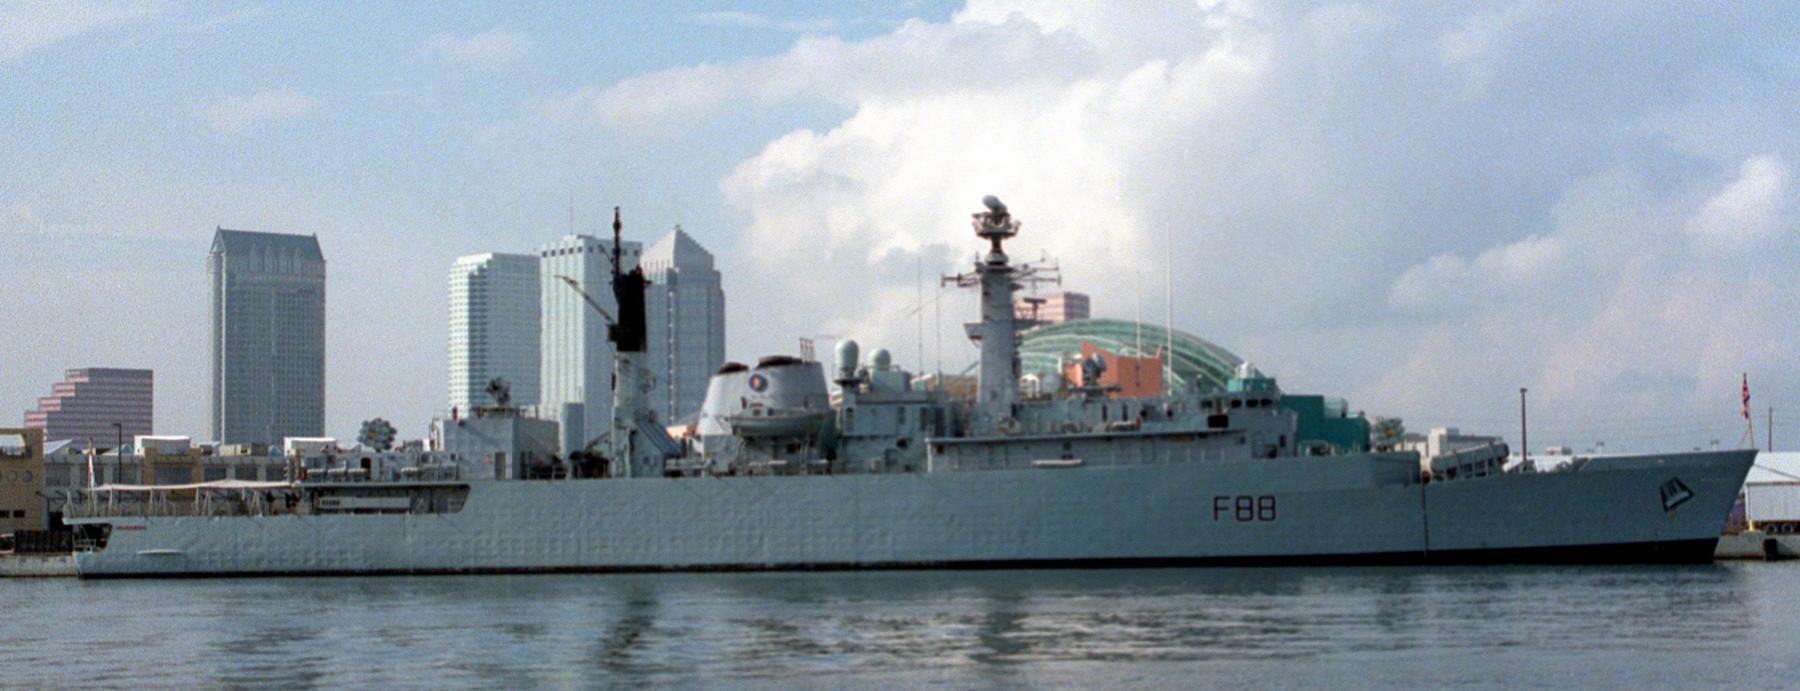 f88 hms broadsword type 22 frigate